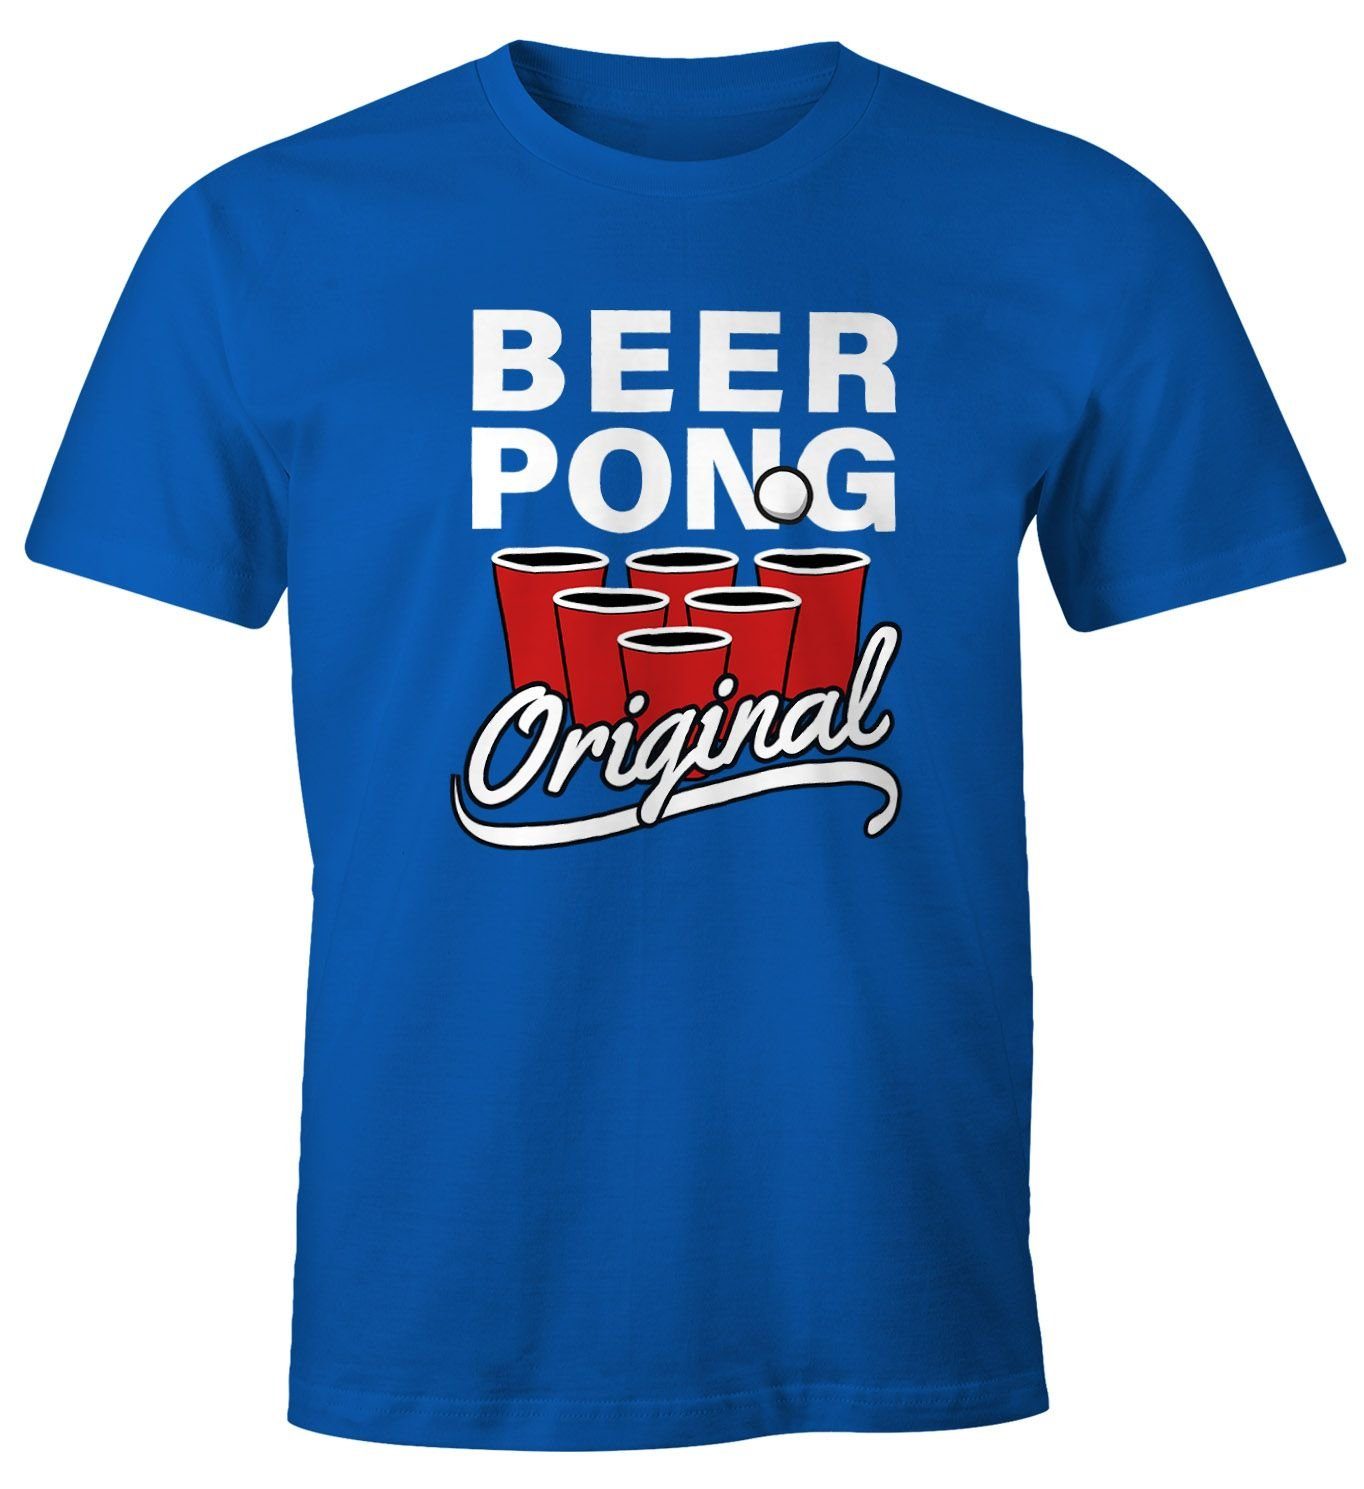 MoonWorks Print-Shirt Herren T-Shirt Beer Print Original Bier mit Pong blau Moonworks® Fun-Shirt